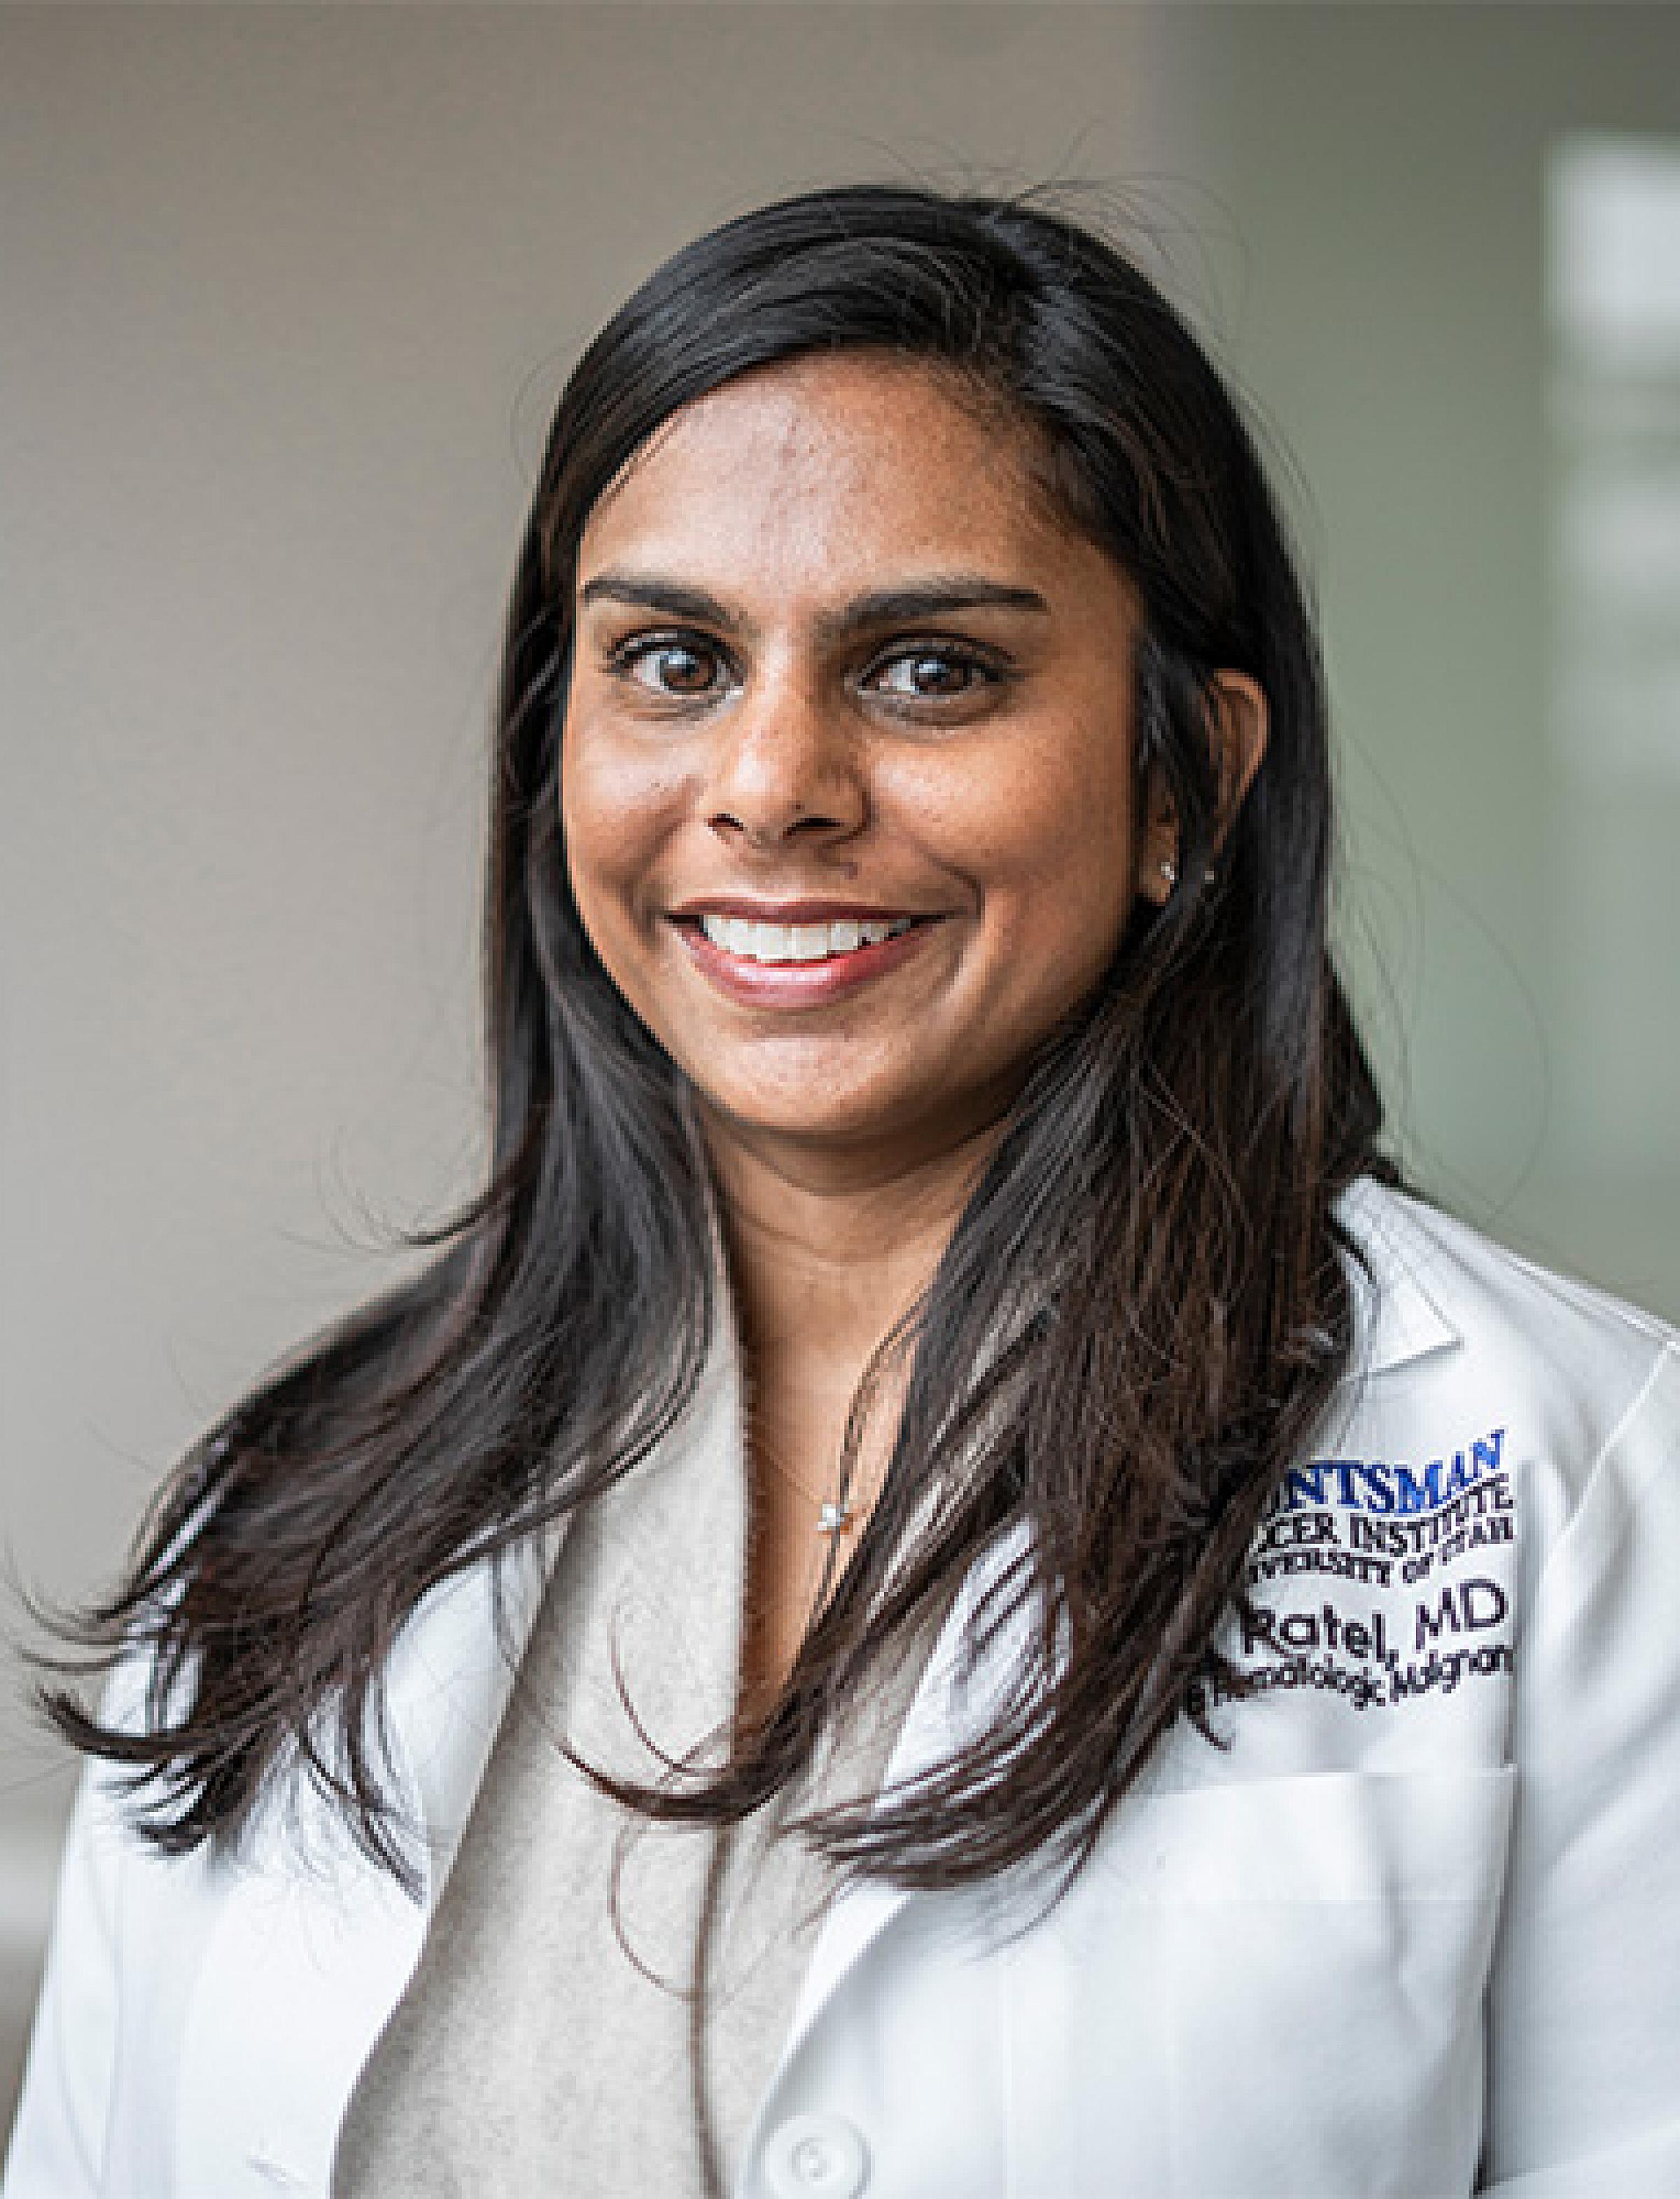  Ami Patel, MD in Lab Coat Portrait